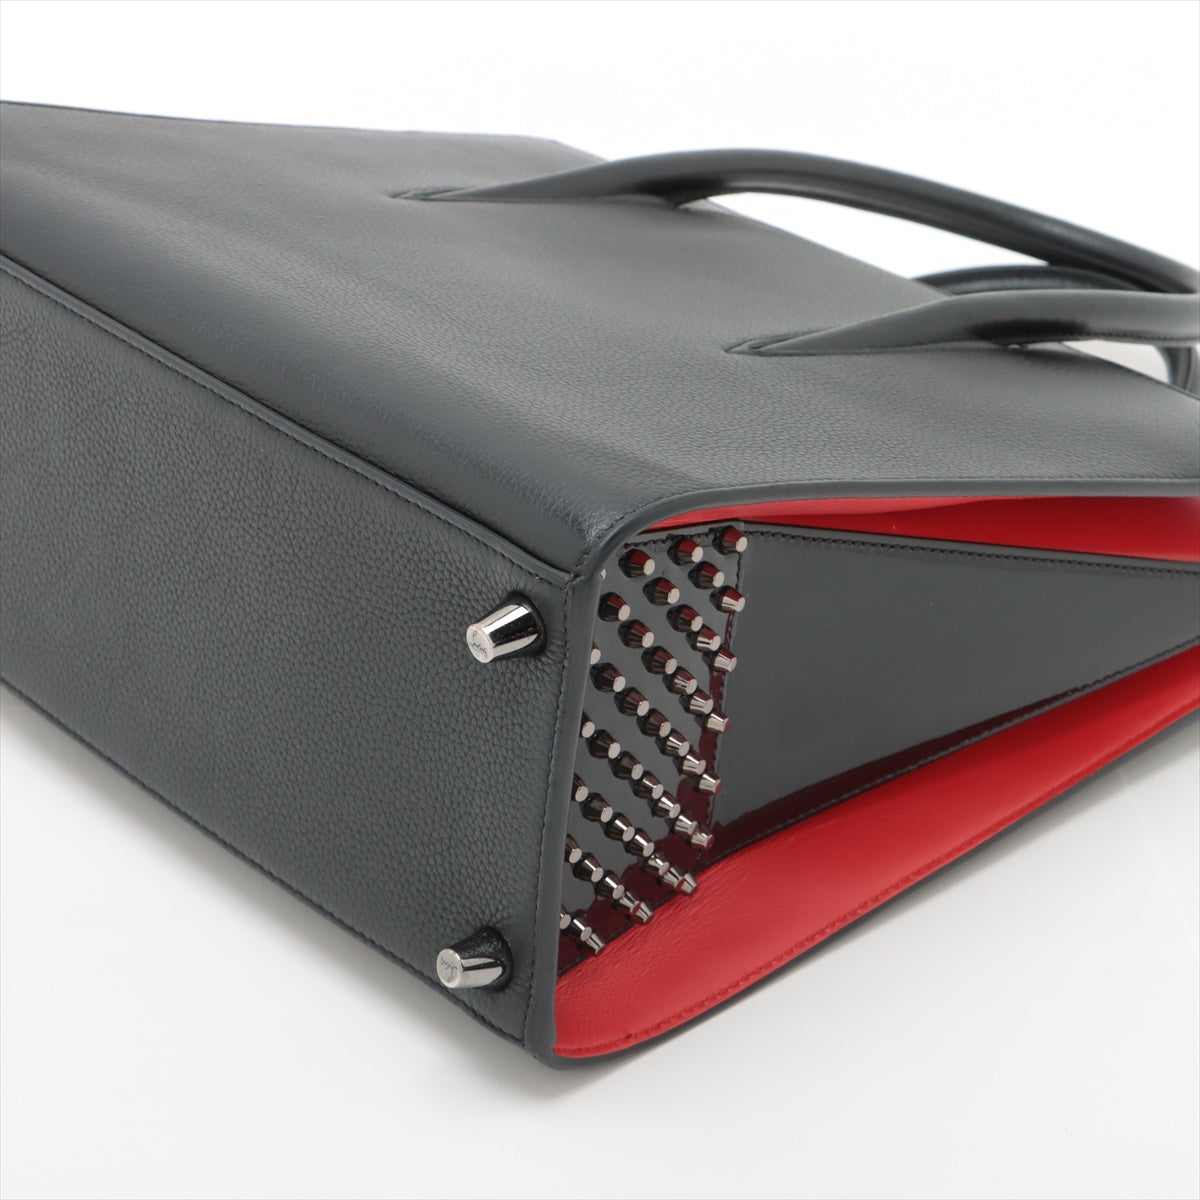 Christian Louboutin Paloma Leather & patent 2way handbag Black